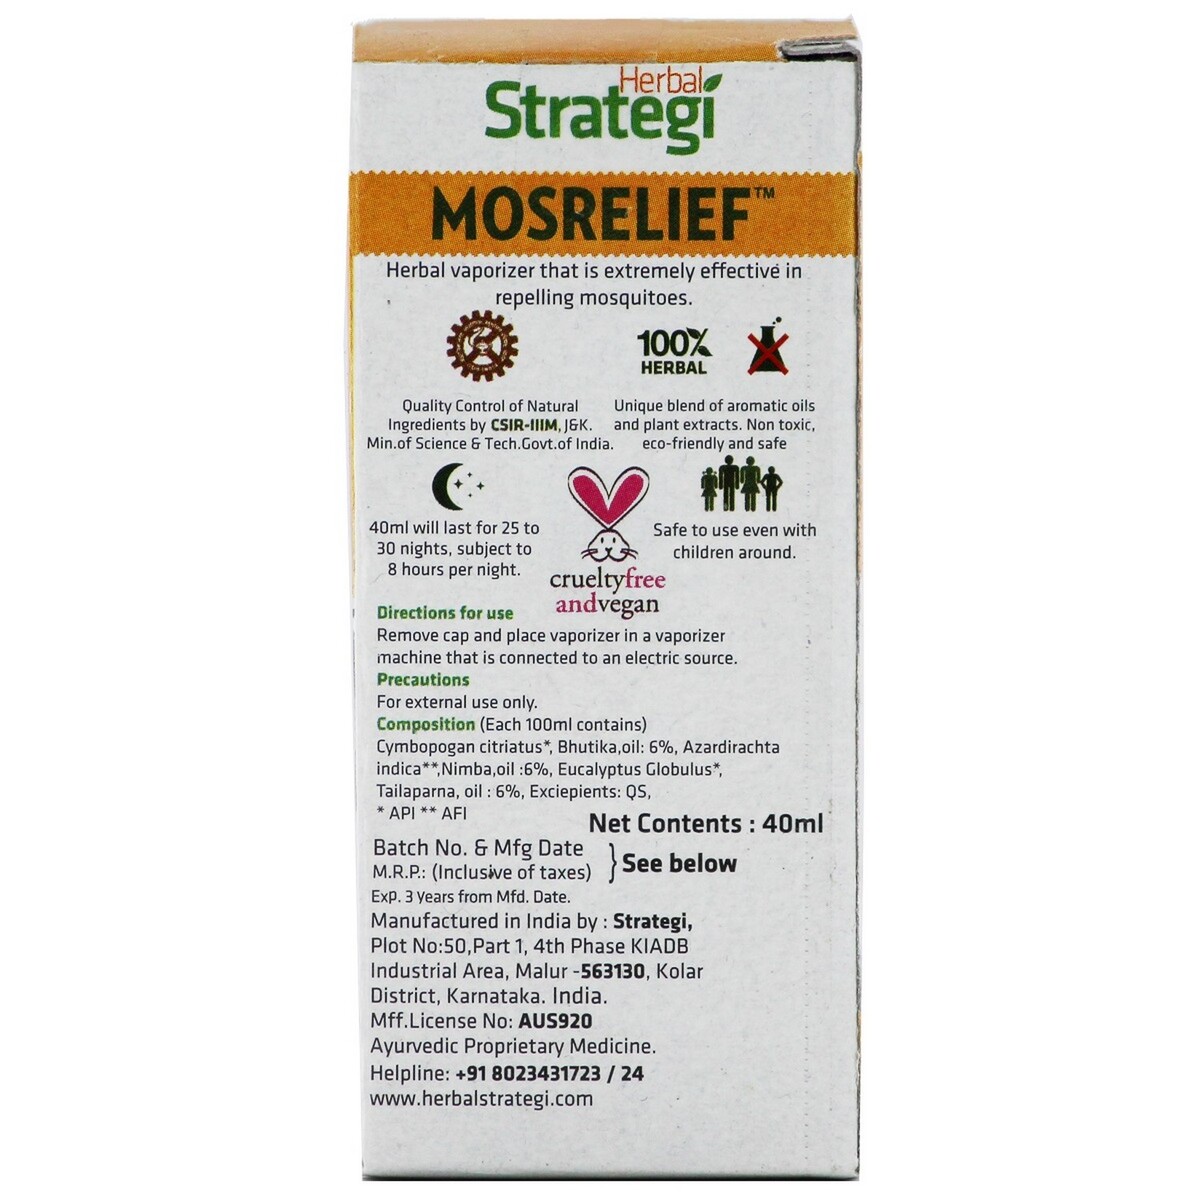 Herbal Strategi Herbal Mosquito Vaporizer Mosrelief 40ml